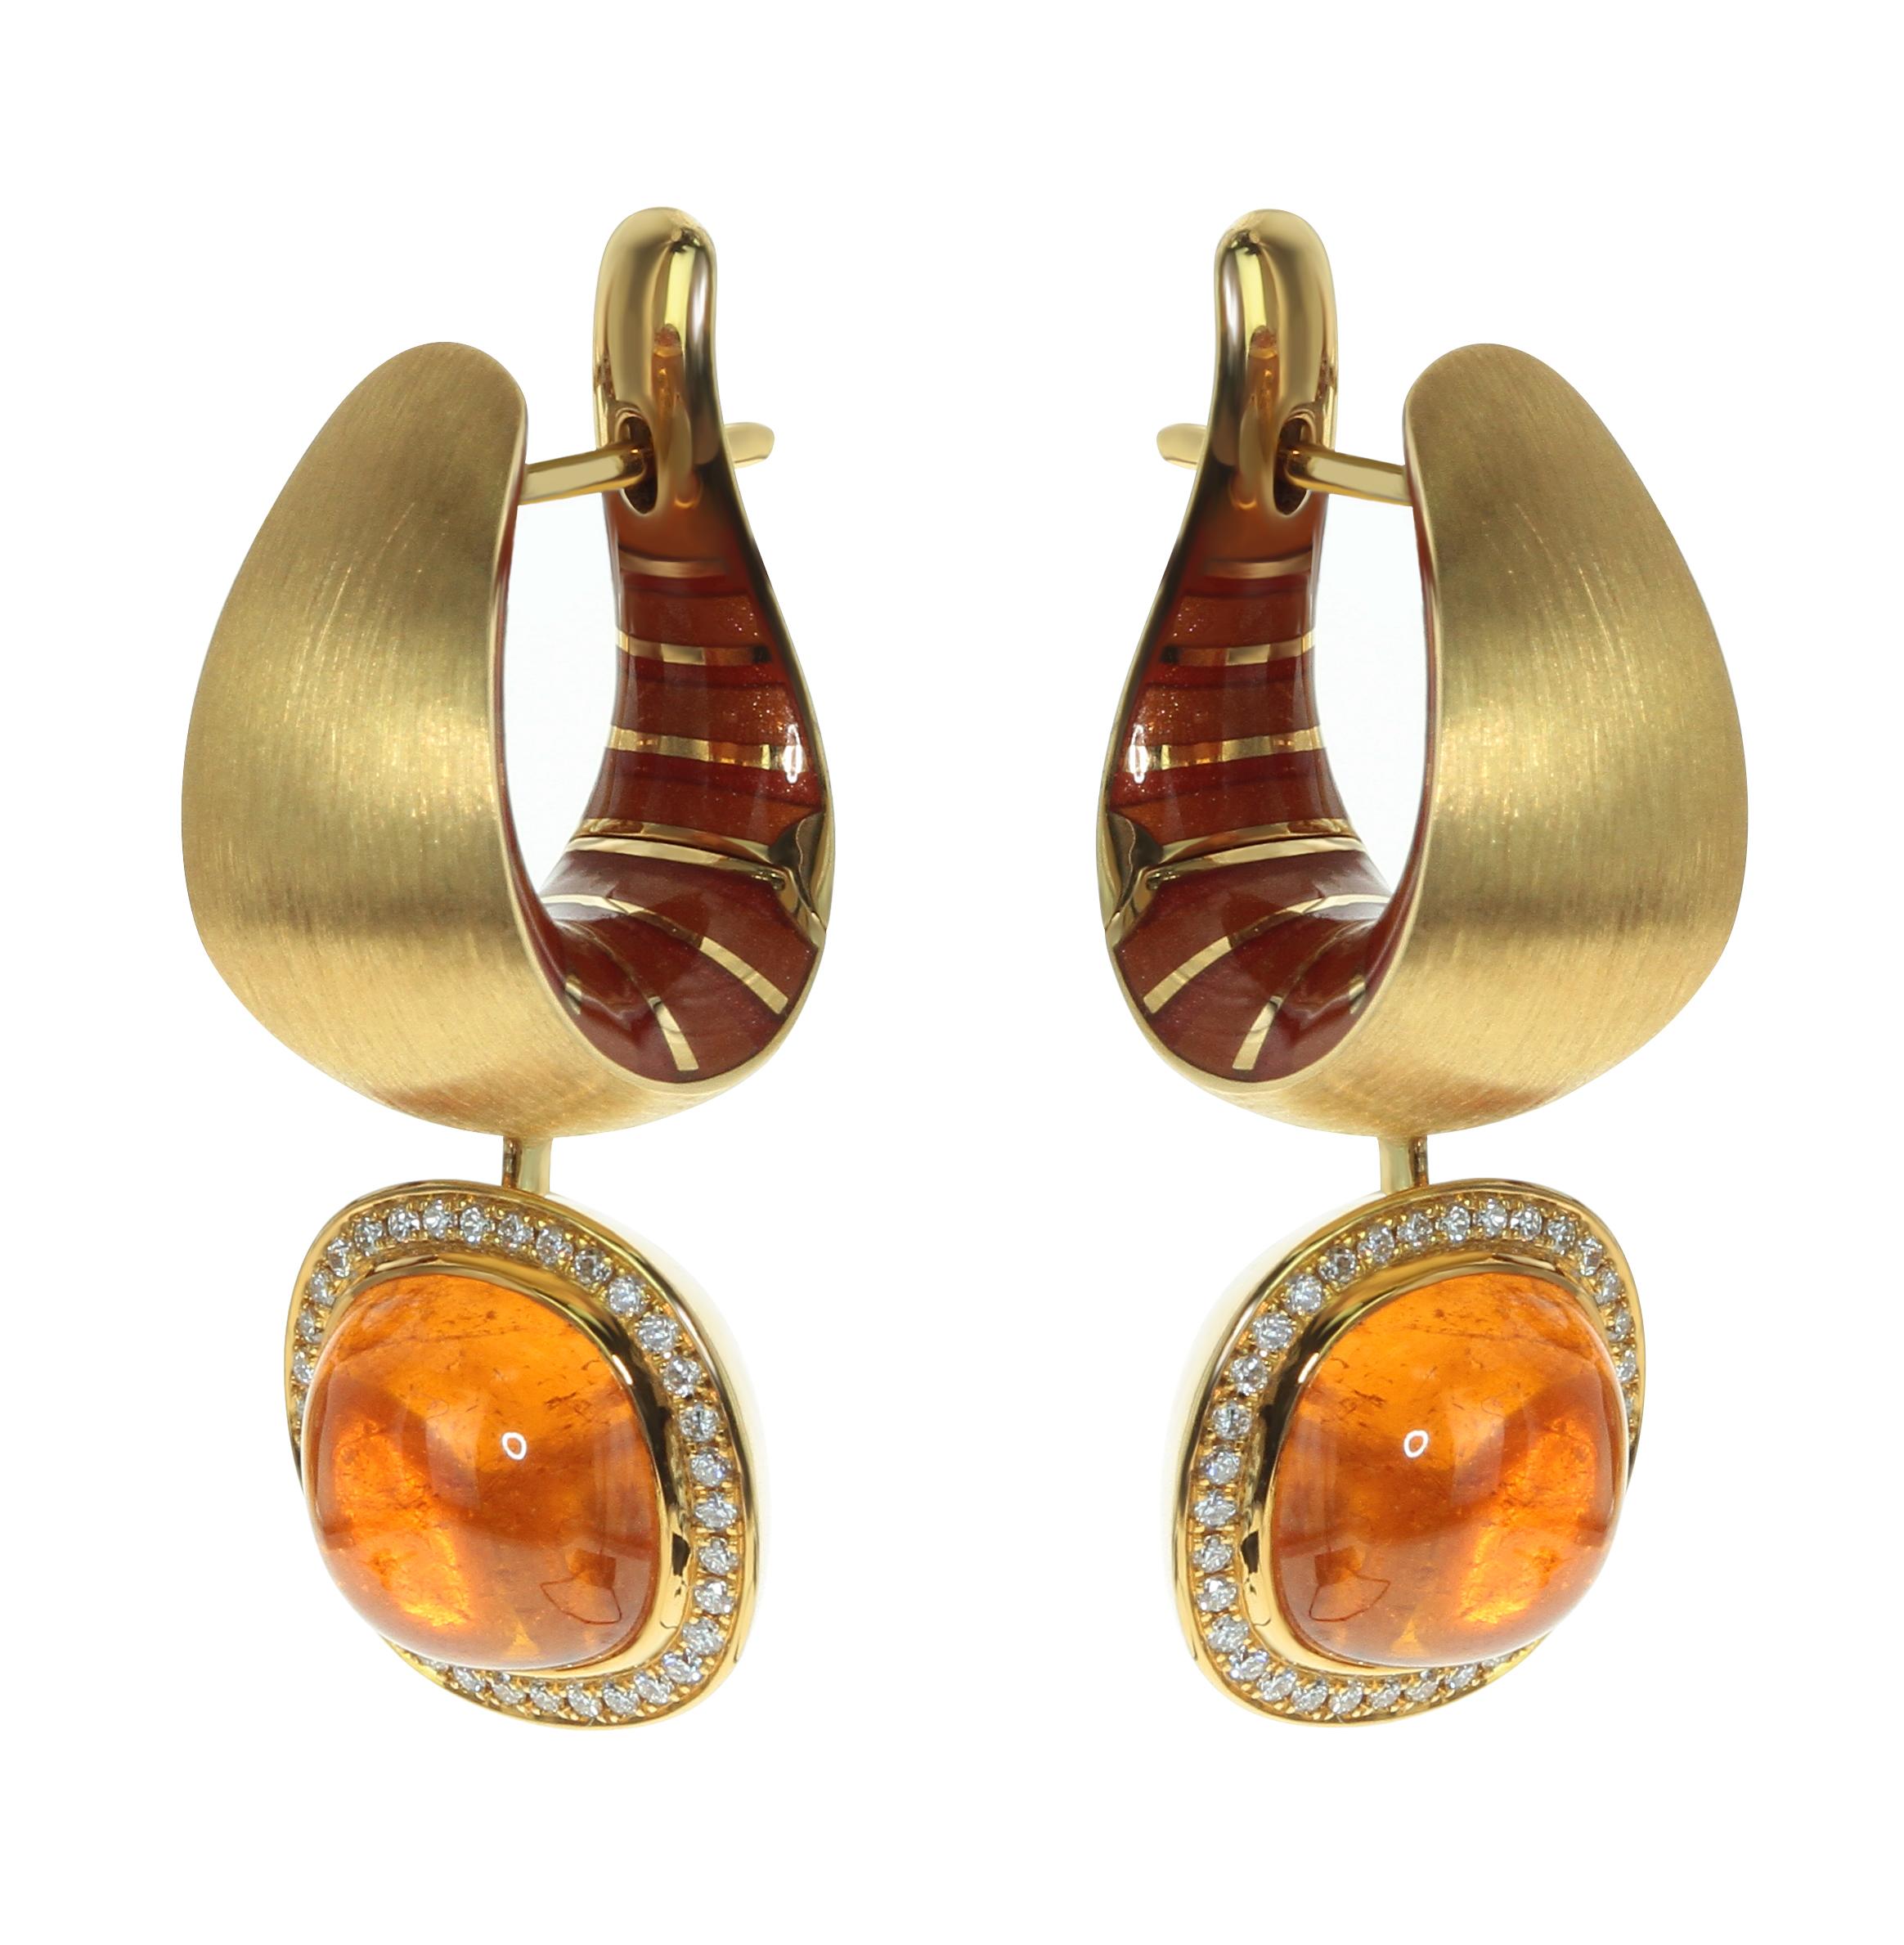 Boucles d'oreilles en or jaune 18 carats avec diamant, grenat mandarin et émail kaléidoscope